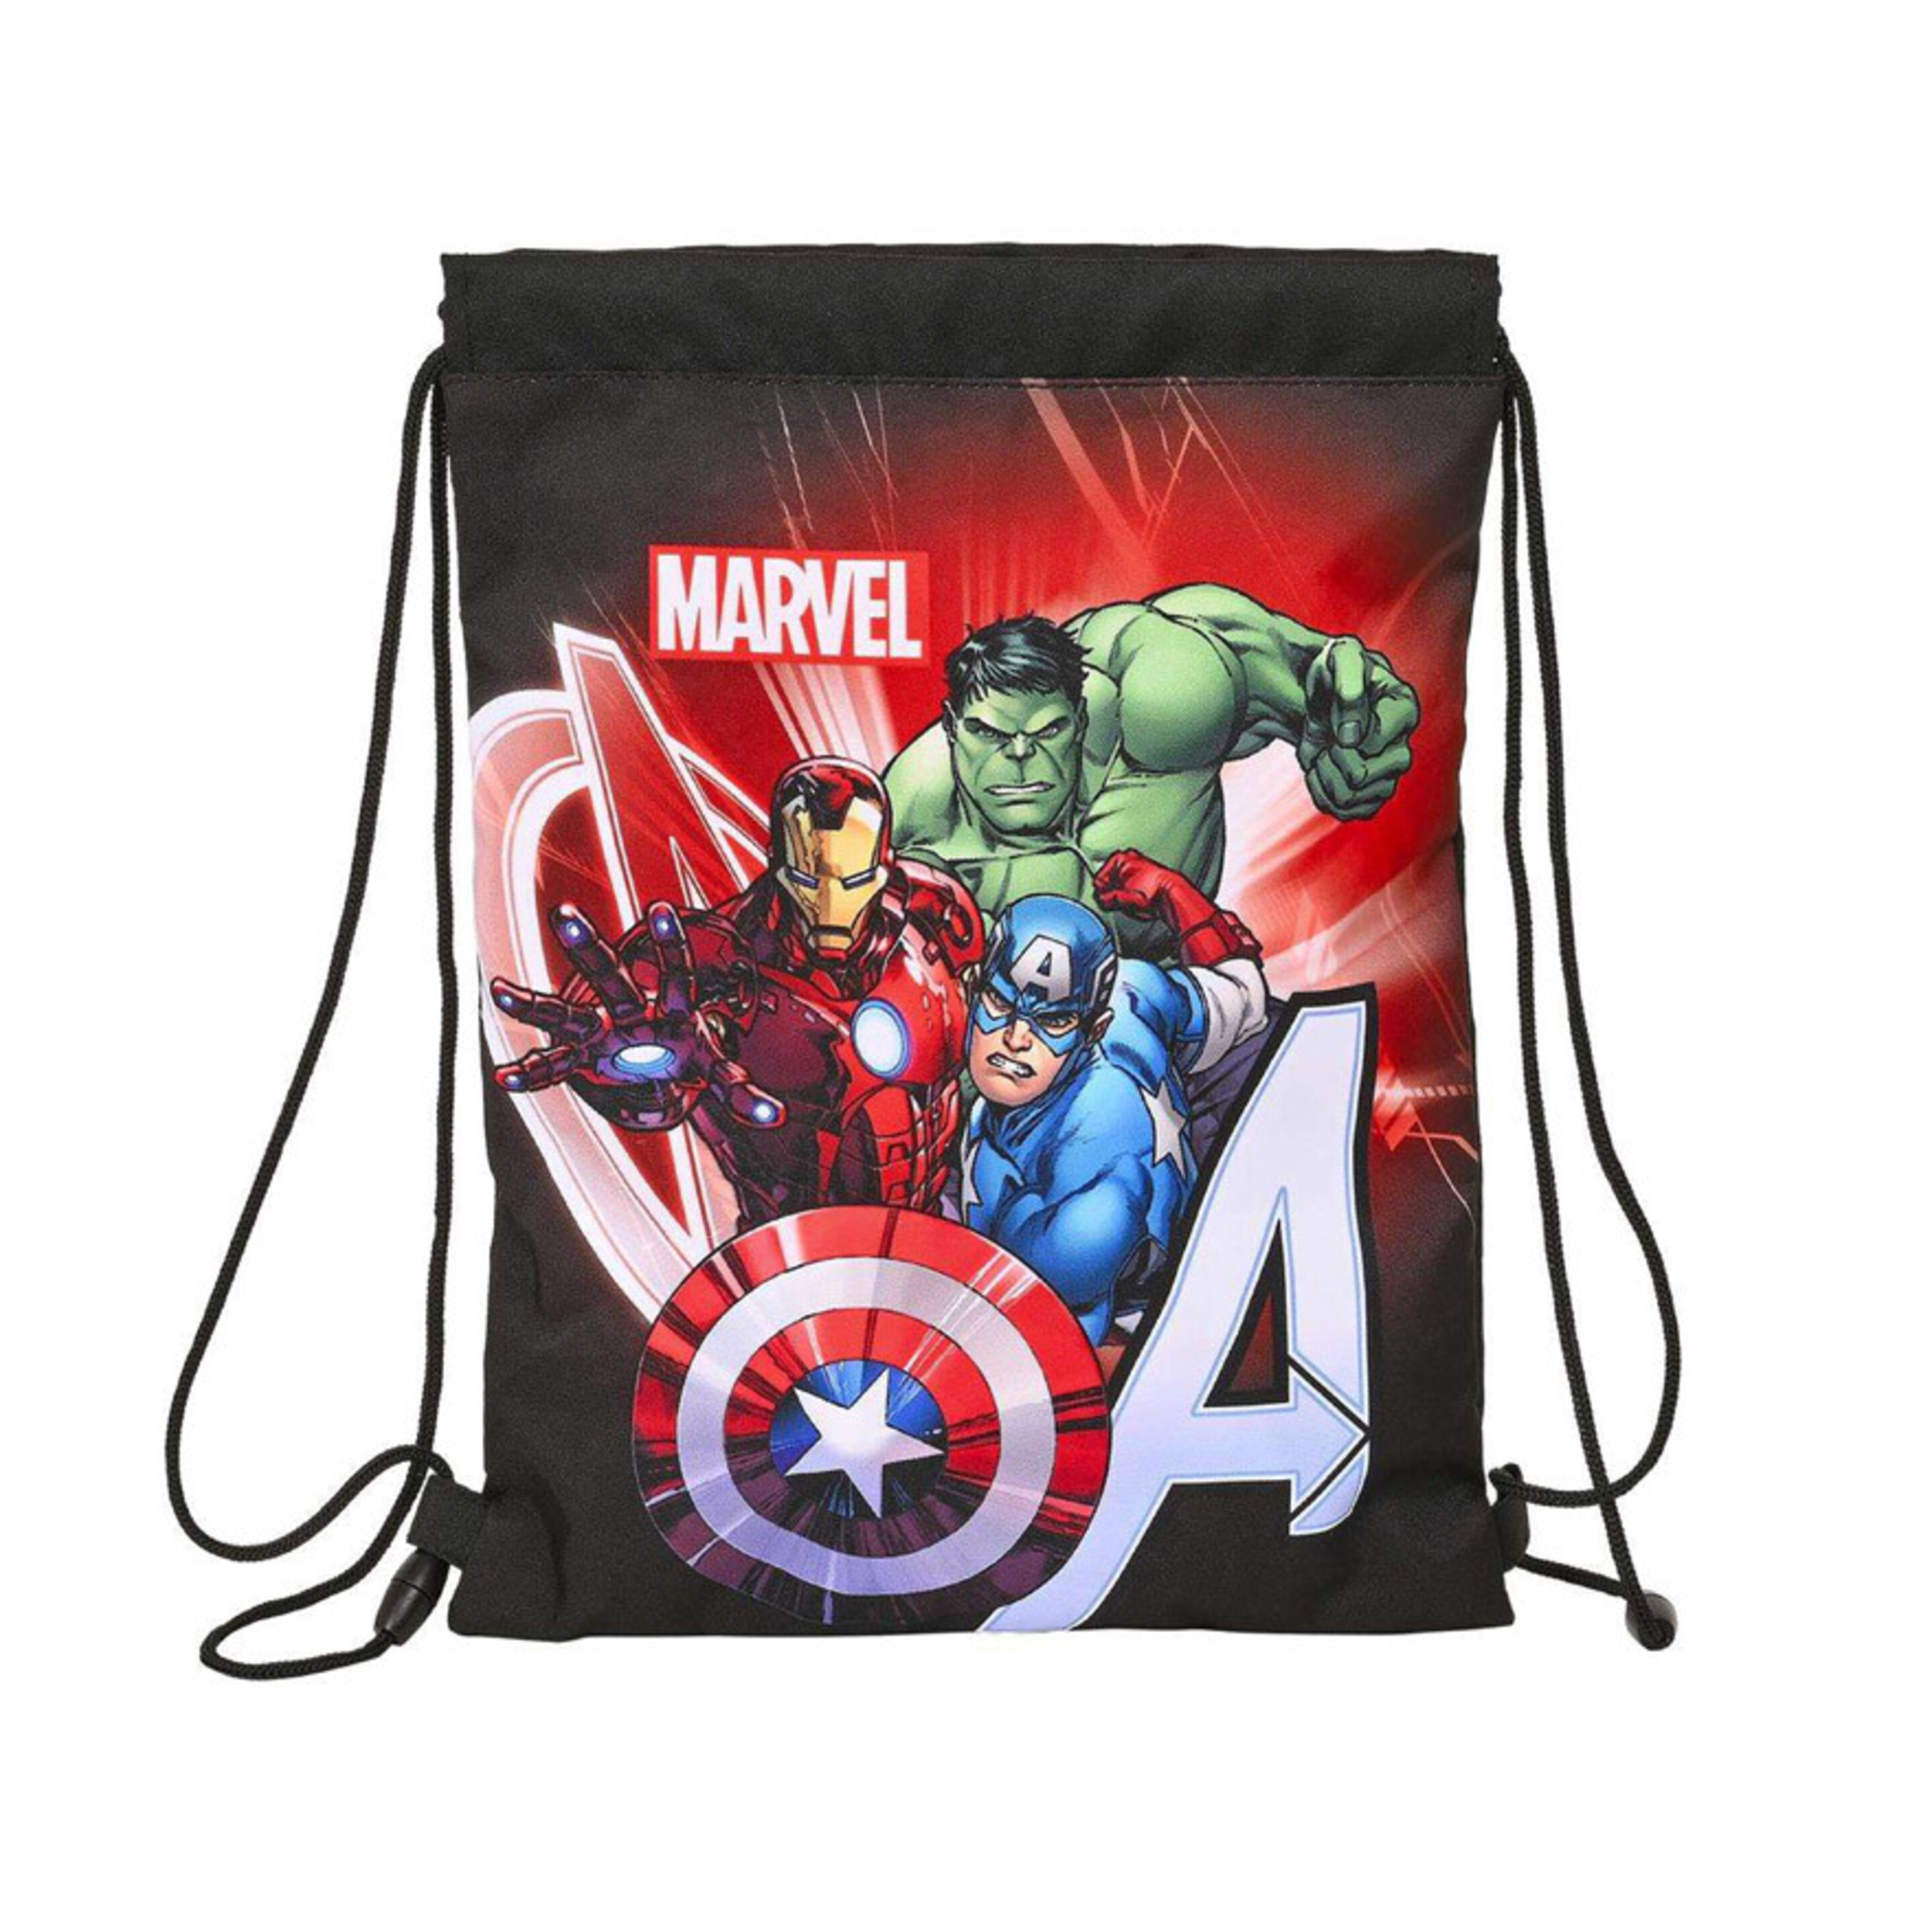 Saco Infinity Vengadores Avengers Marvel 34cm - multicolor - 